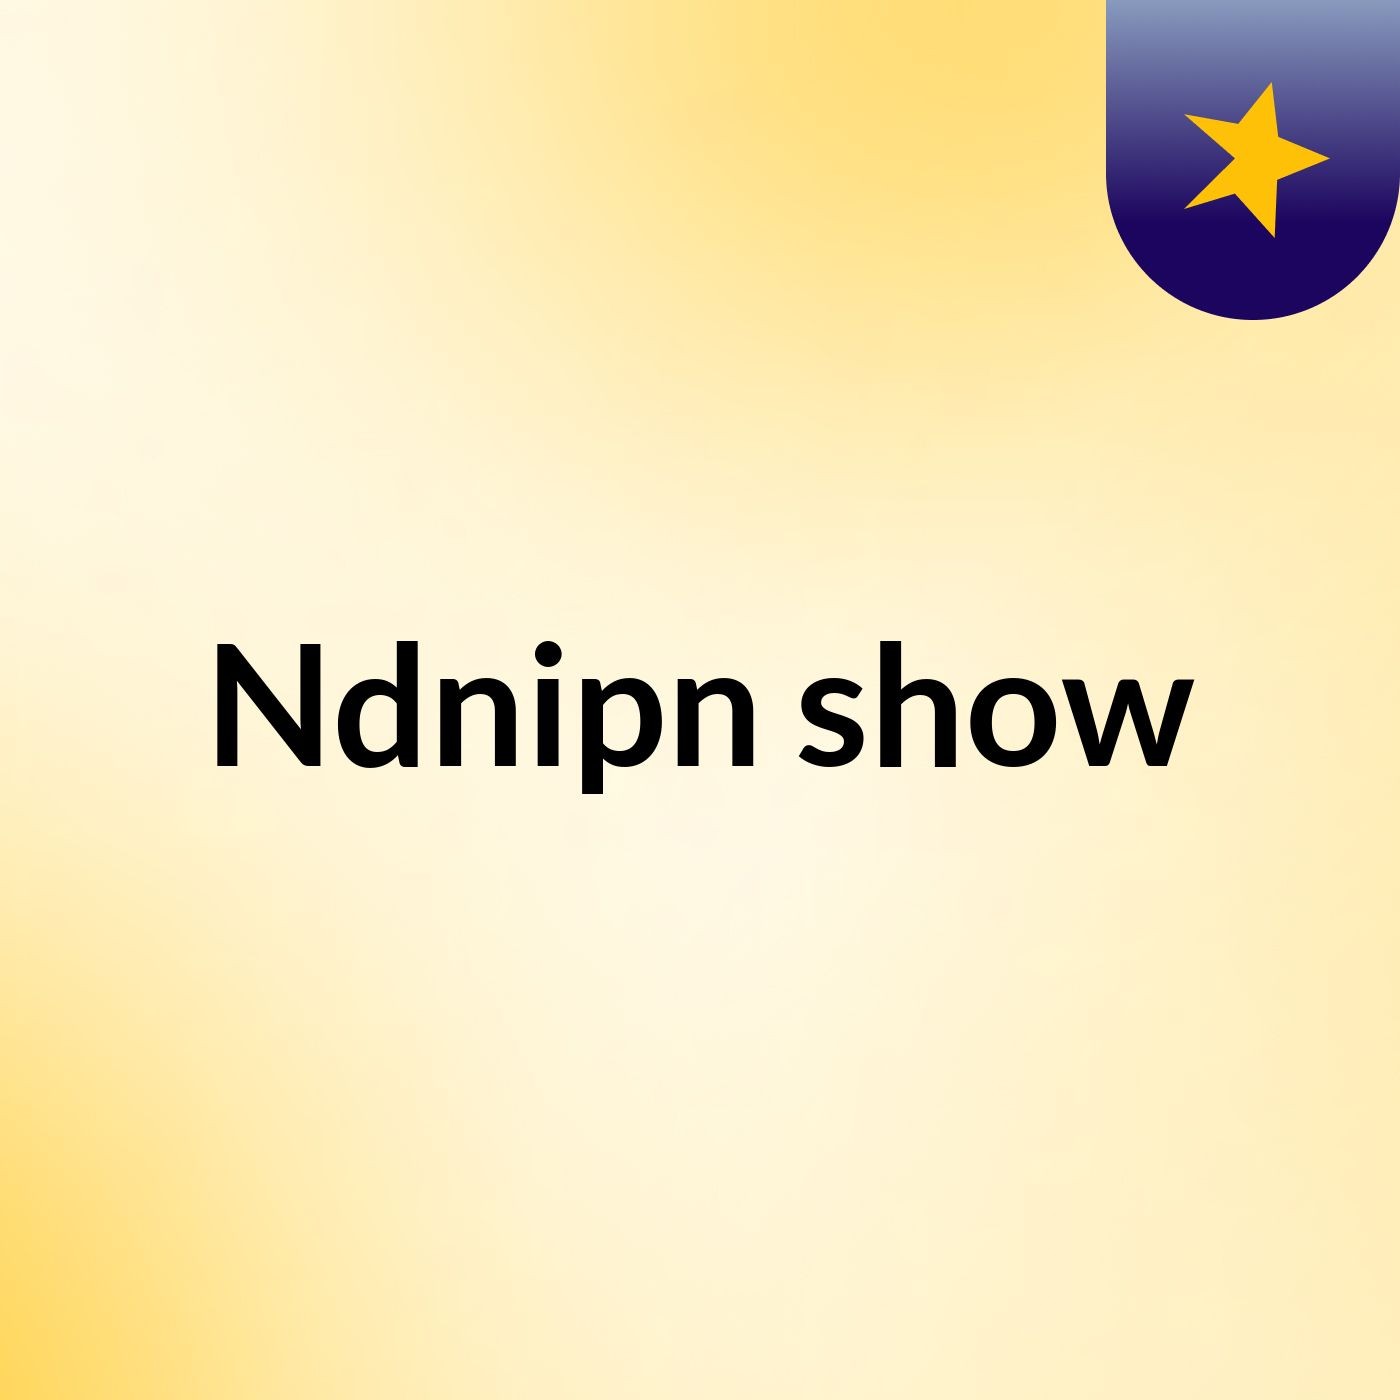 Ndnipn show